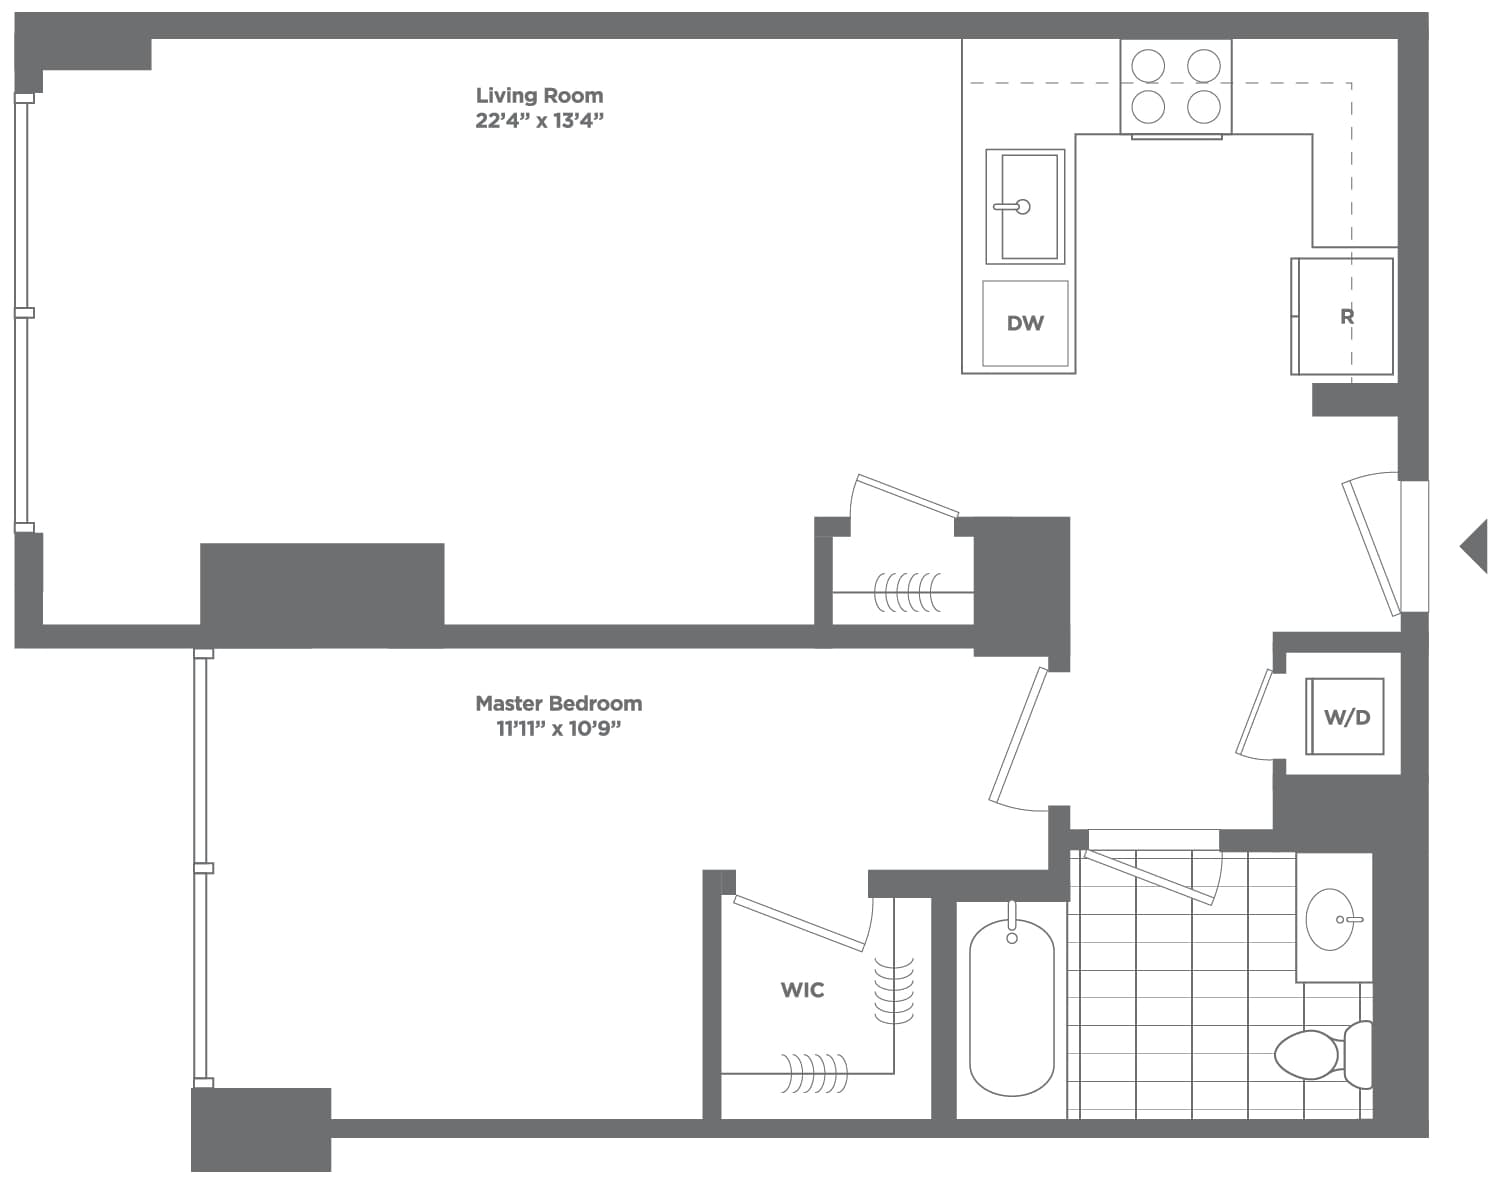 View Park + Garden Apartment Floor Plans Studios, 1, 2